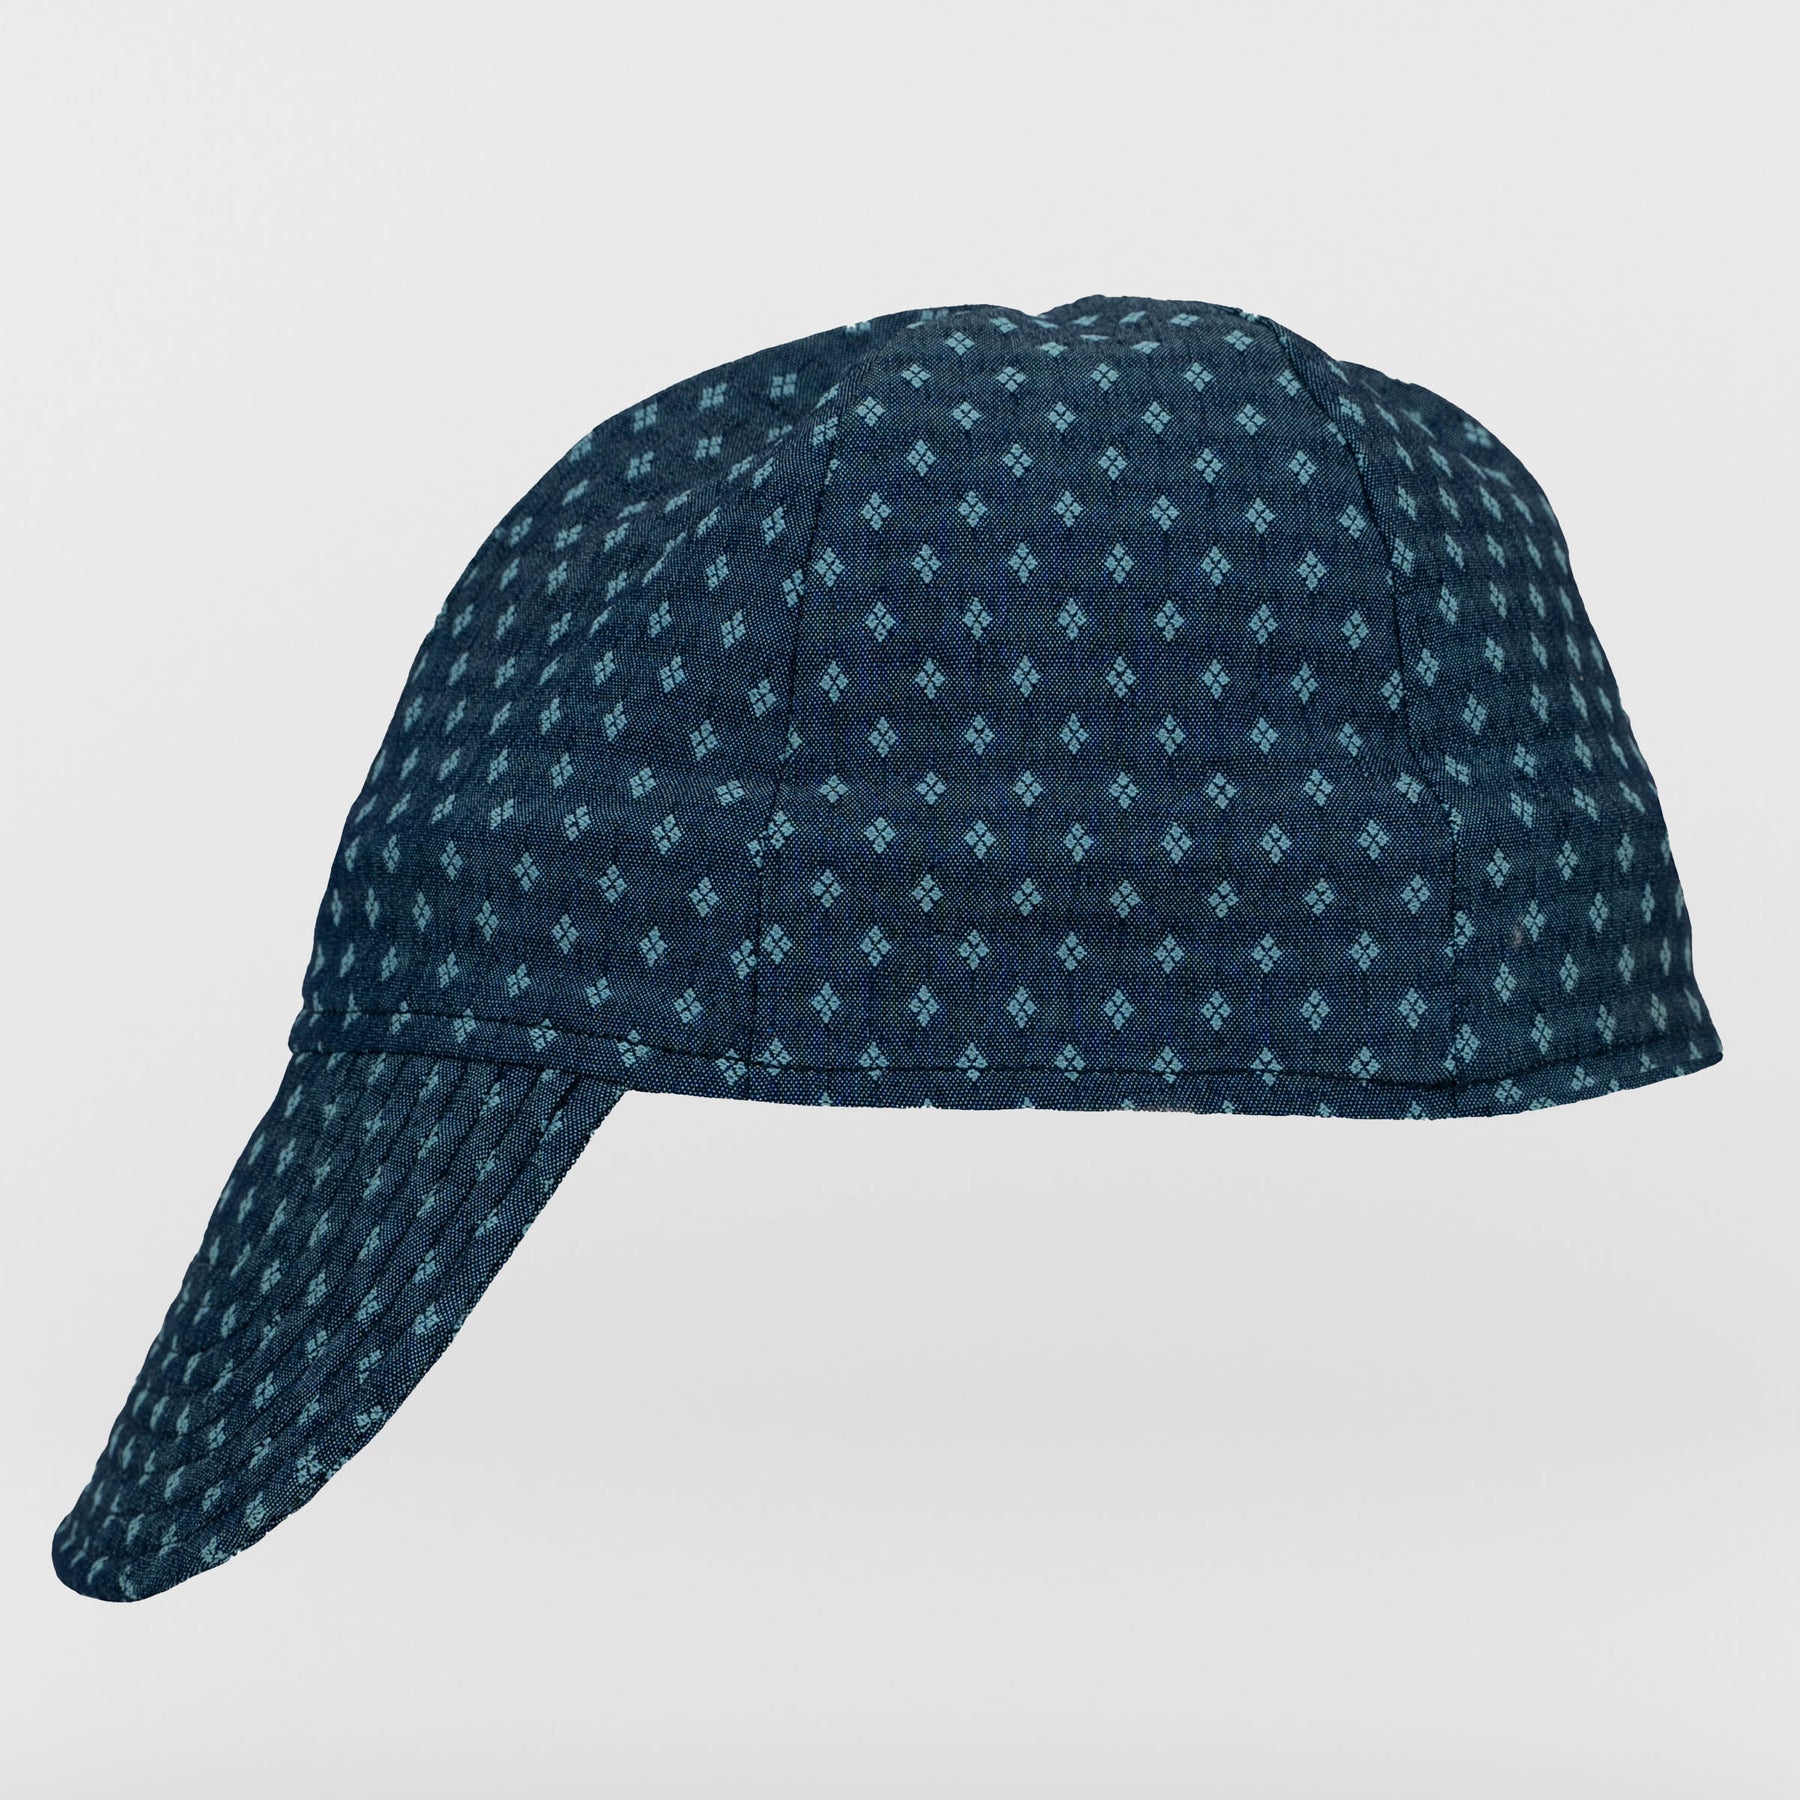 Calico Print Harvester Hat